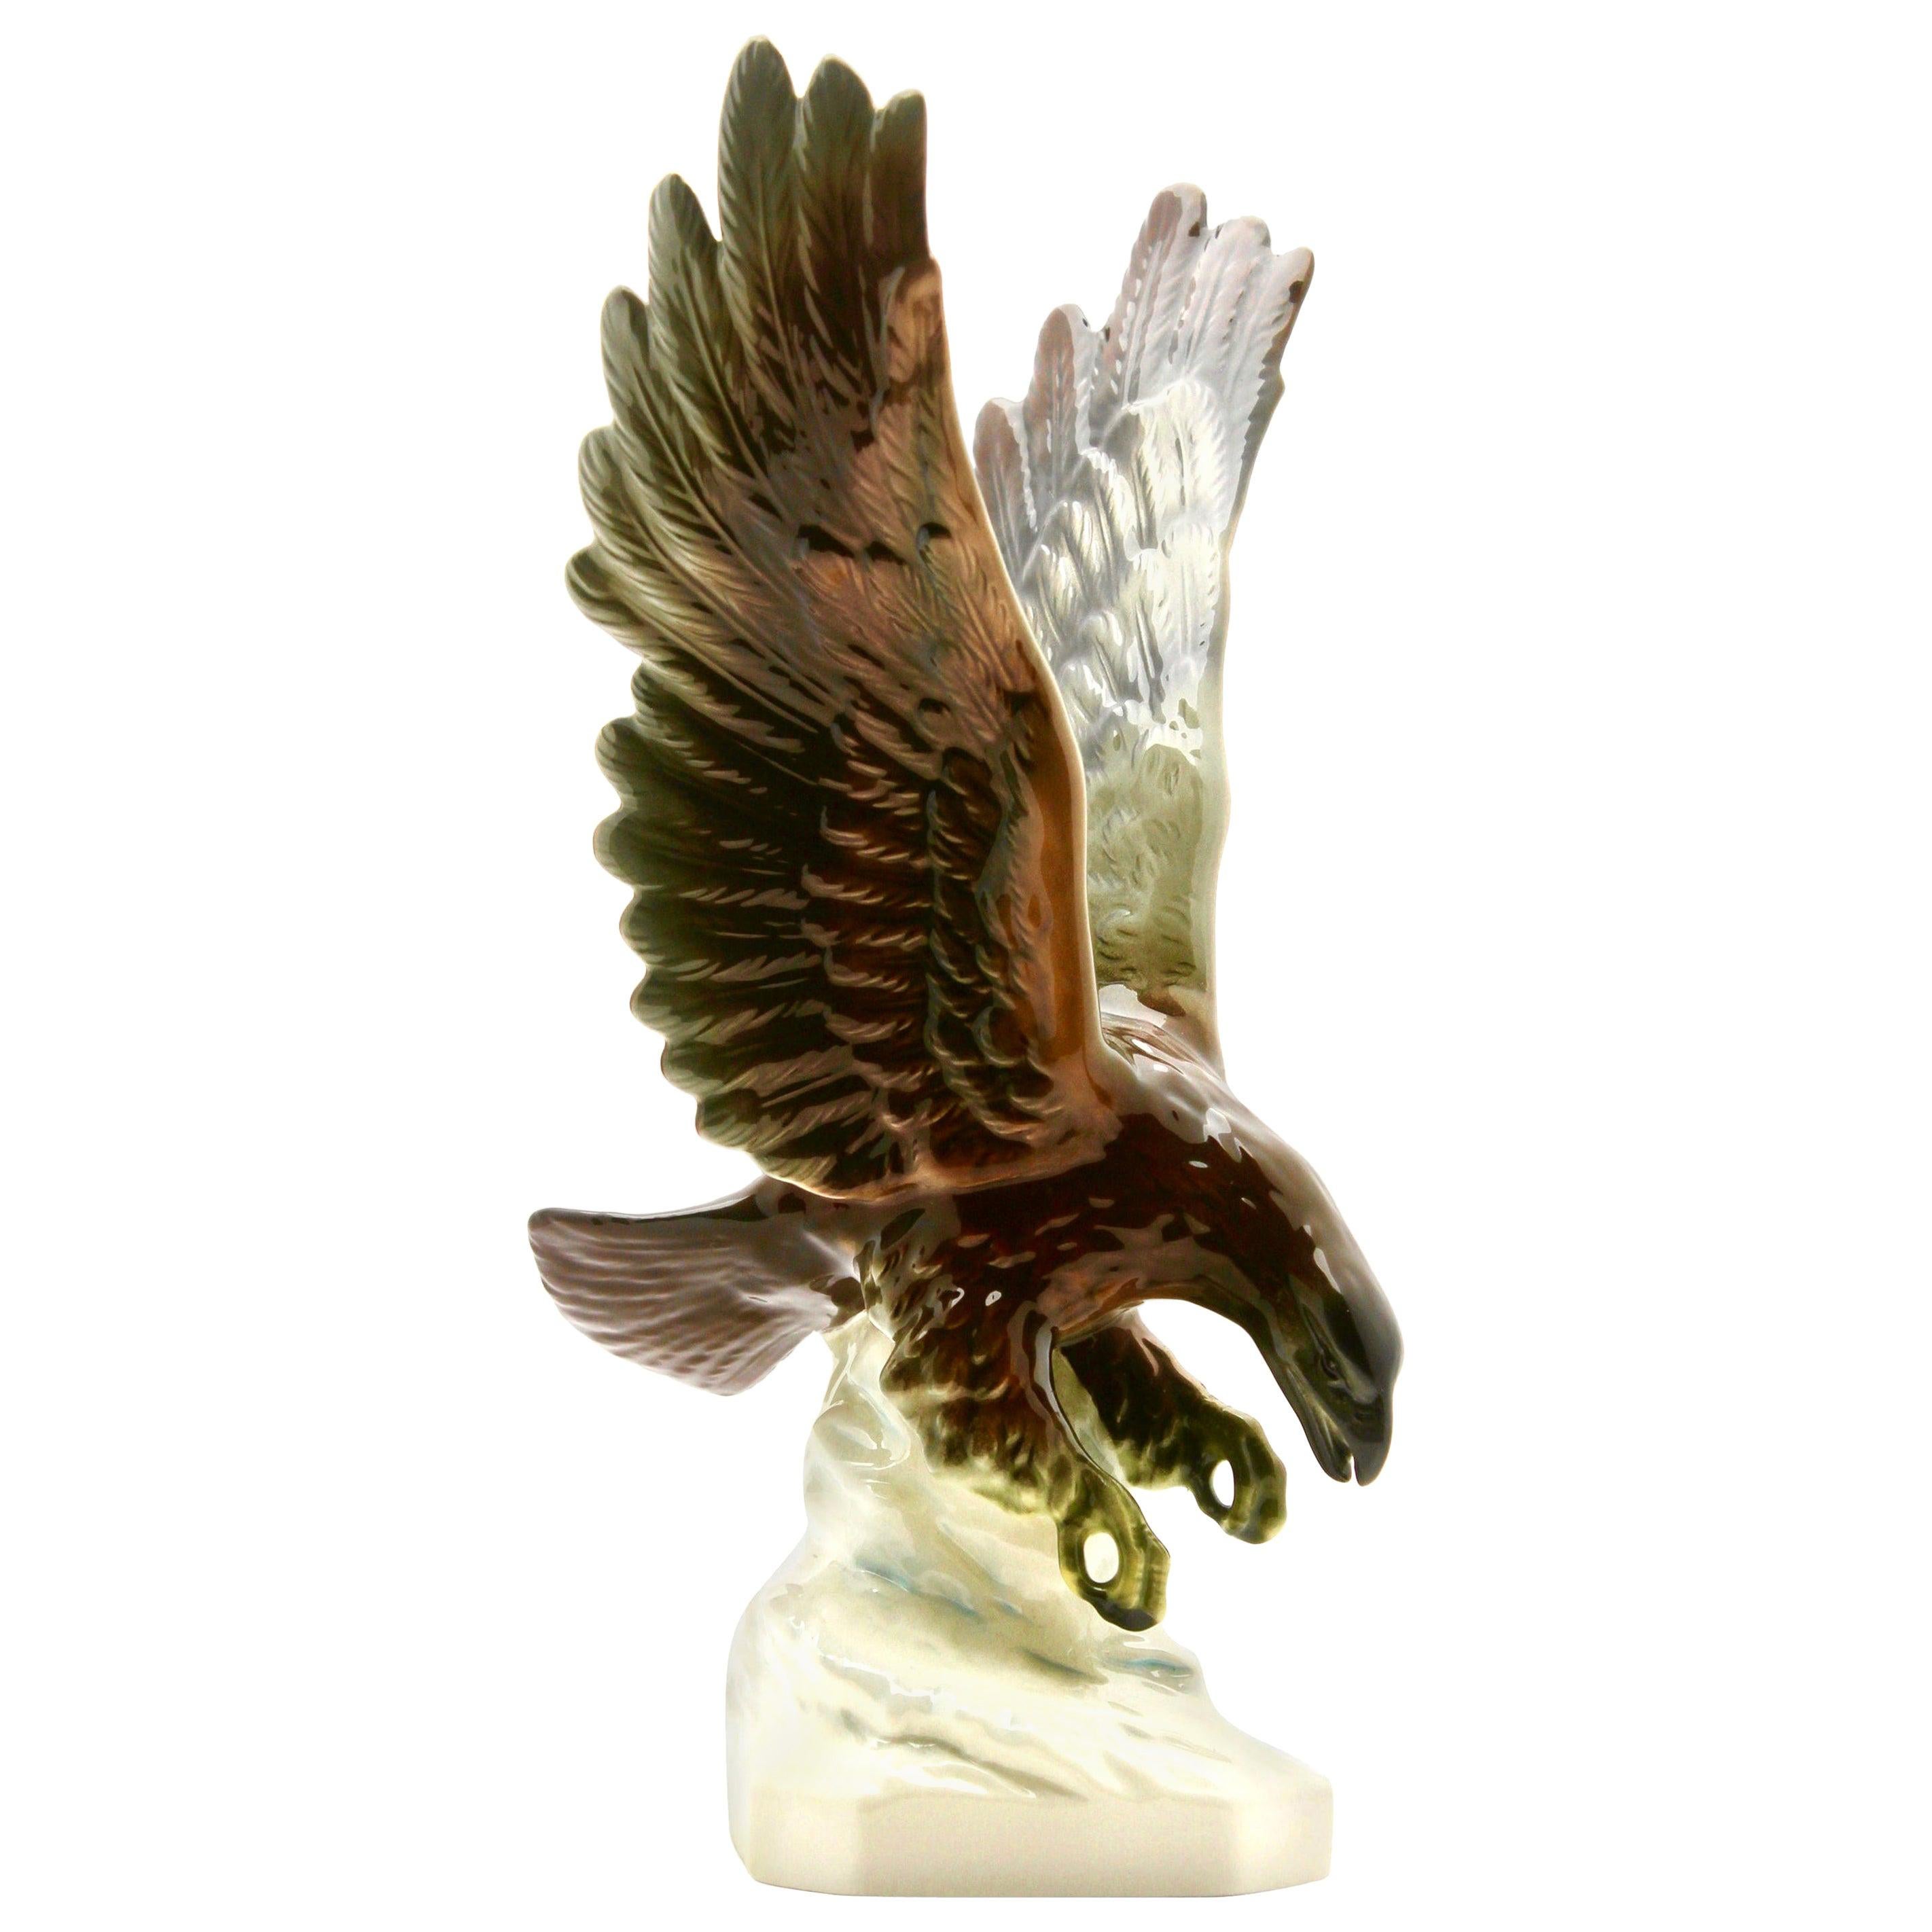 Porcelain Figurine of a Bird of Prey by Goebel Germany, Signed 'Goebel'